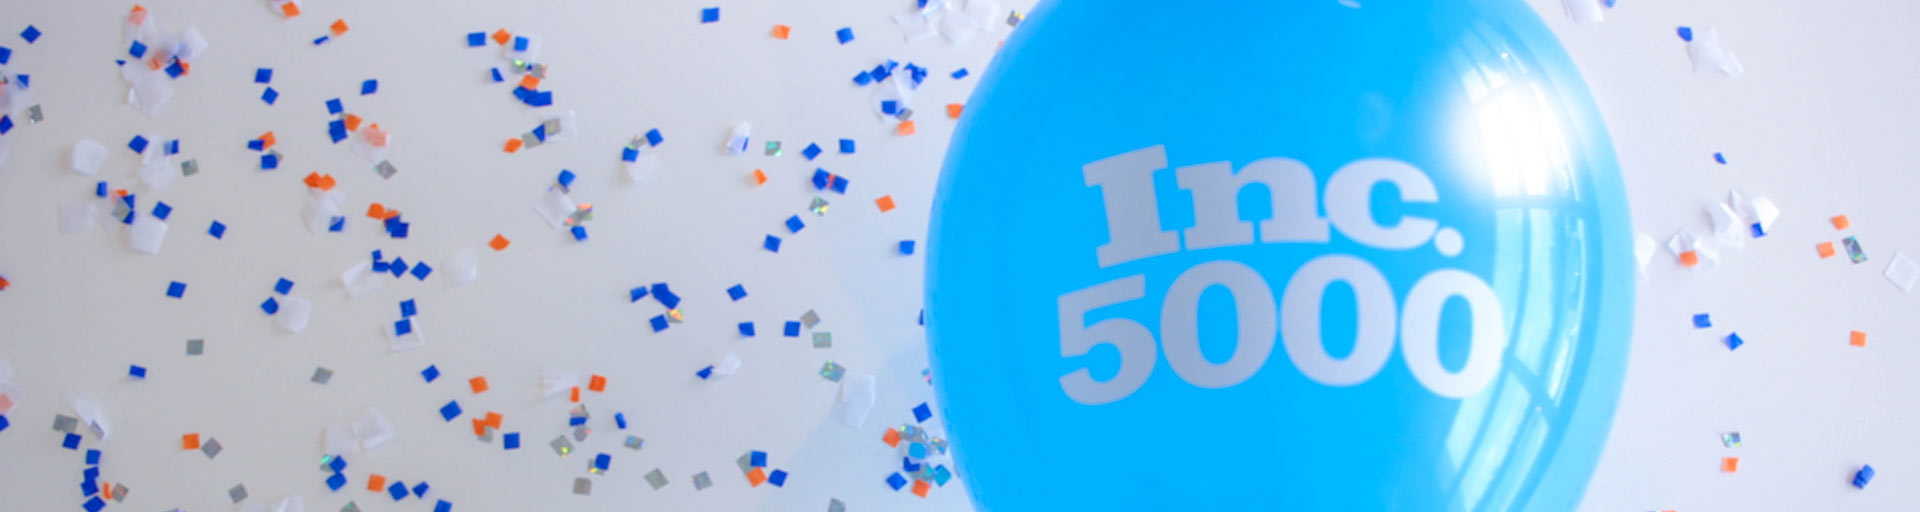 Inc. 5000 balloon